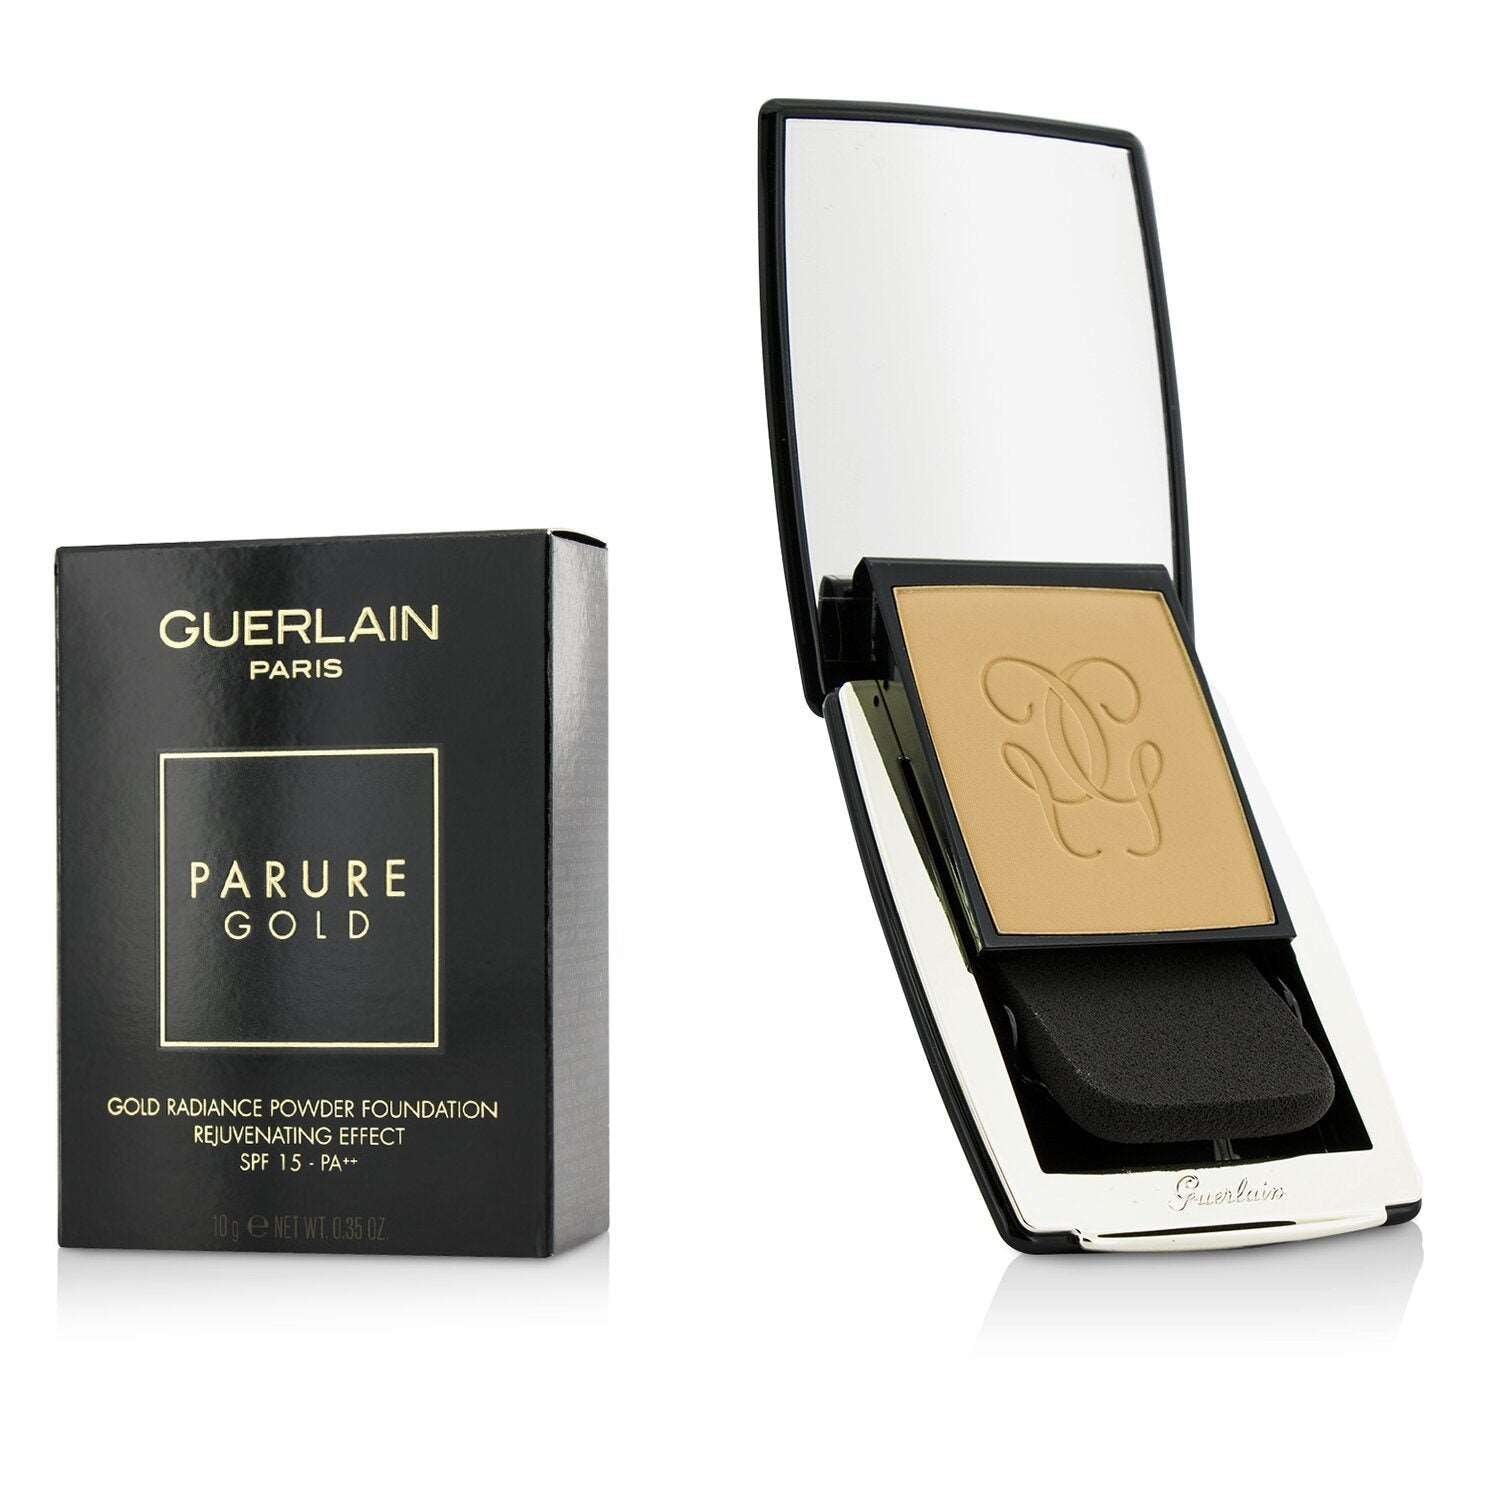 GUERLAIN -Parure Gold Rejuvenating Gold Radiance Powder Foundation SPF 15-# 03 Beige Naturel-10g/0.35oz 3P's Inclusive Beauty